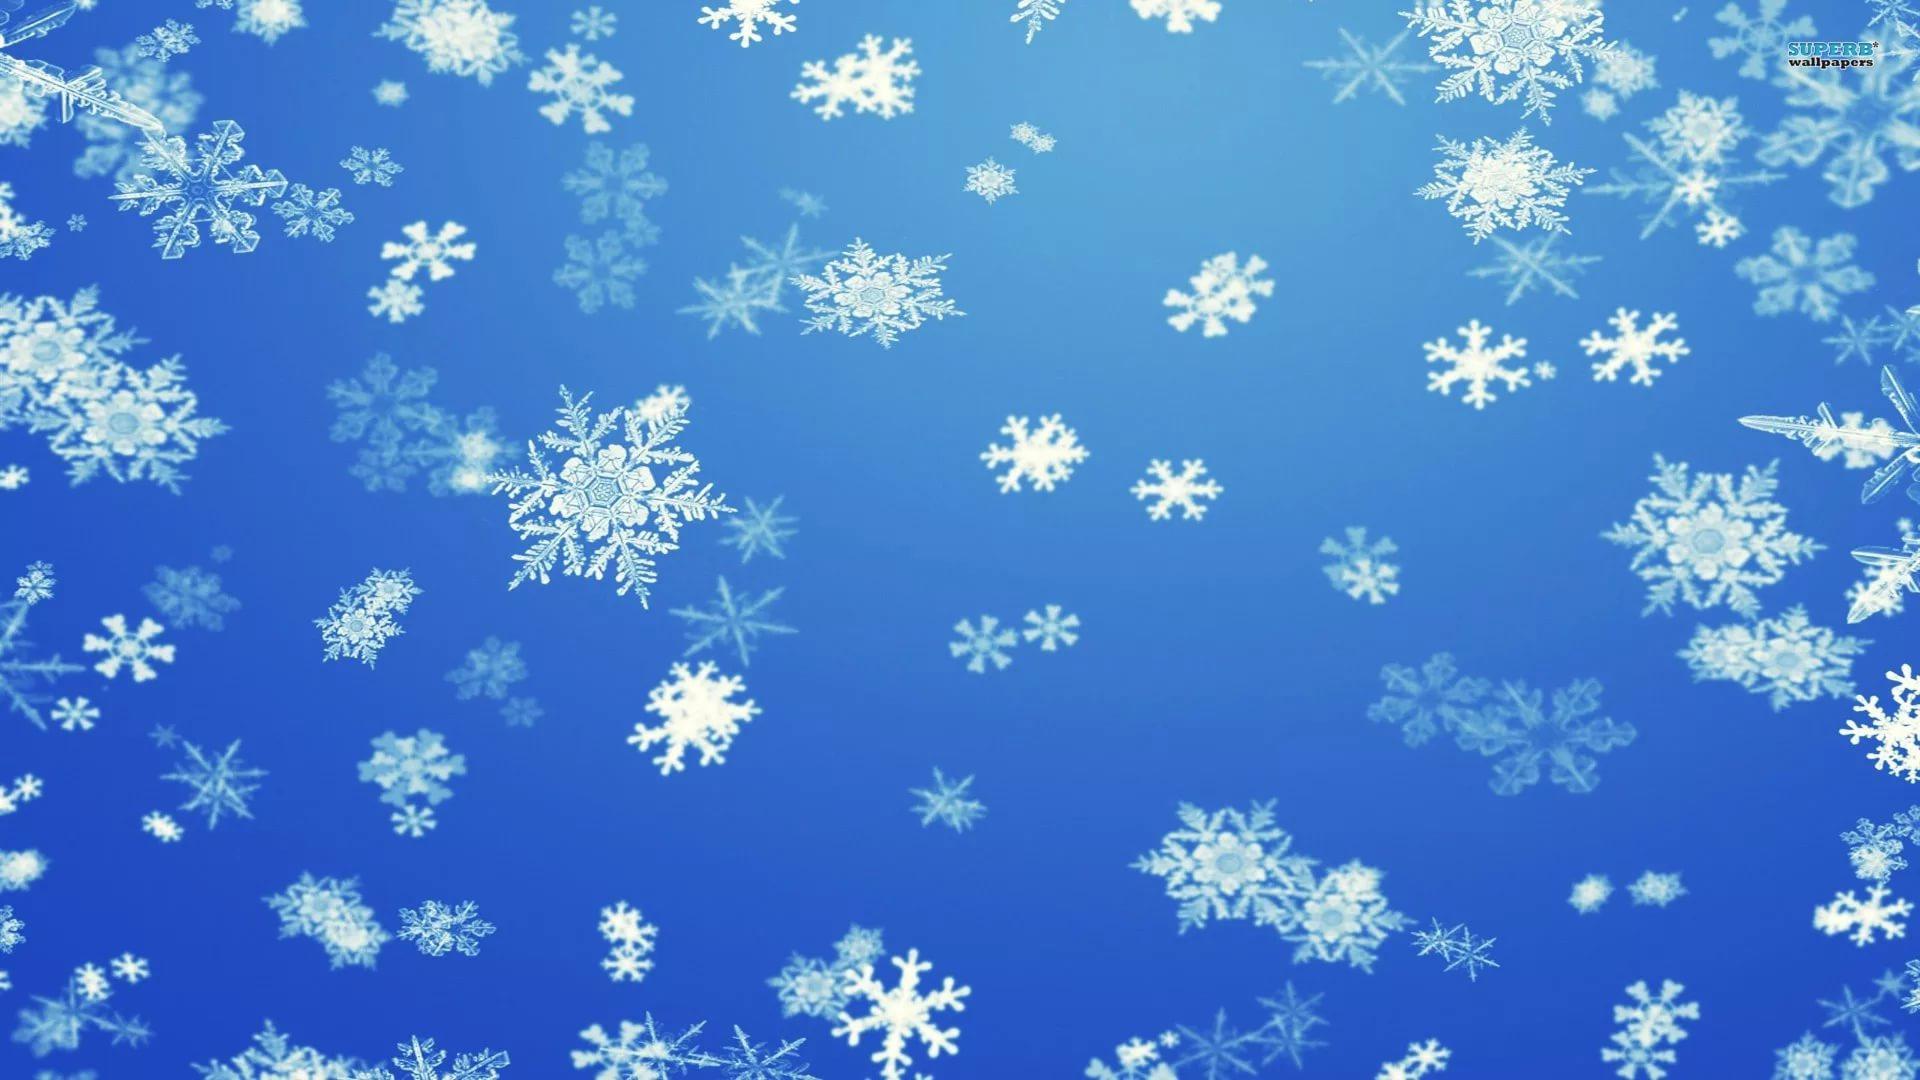 Snowflakes HD Wallpaper free